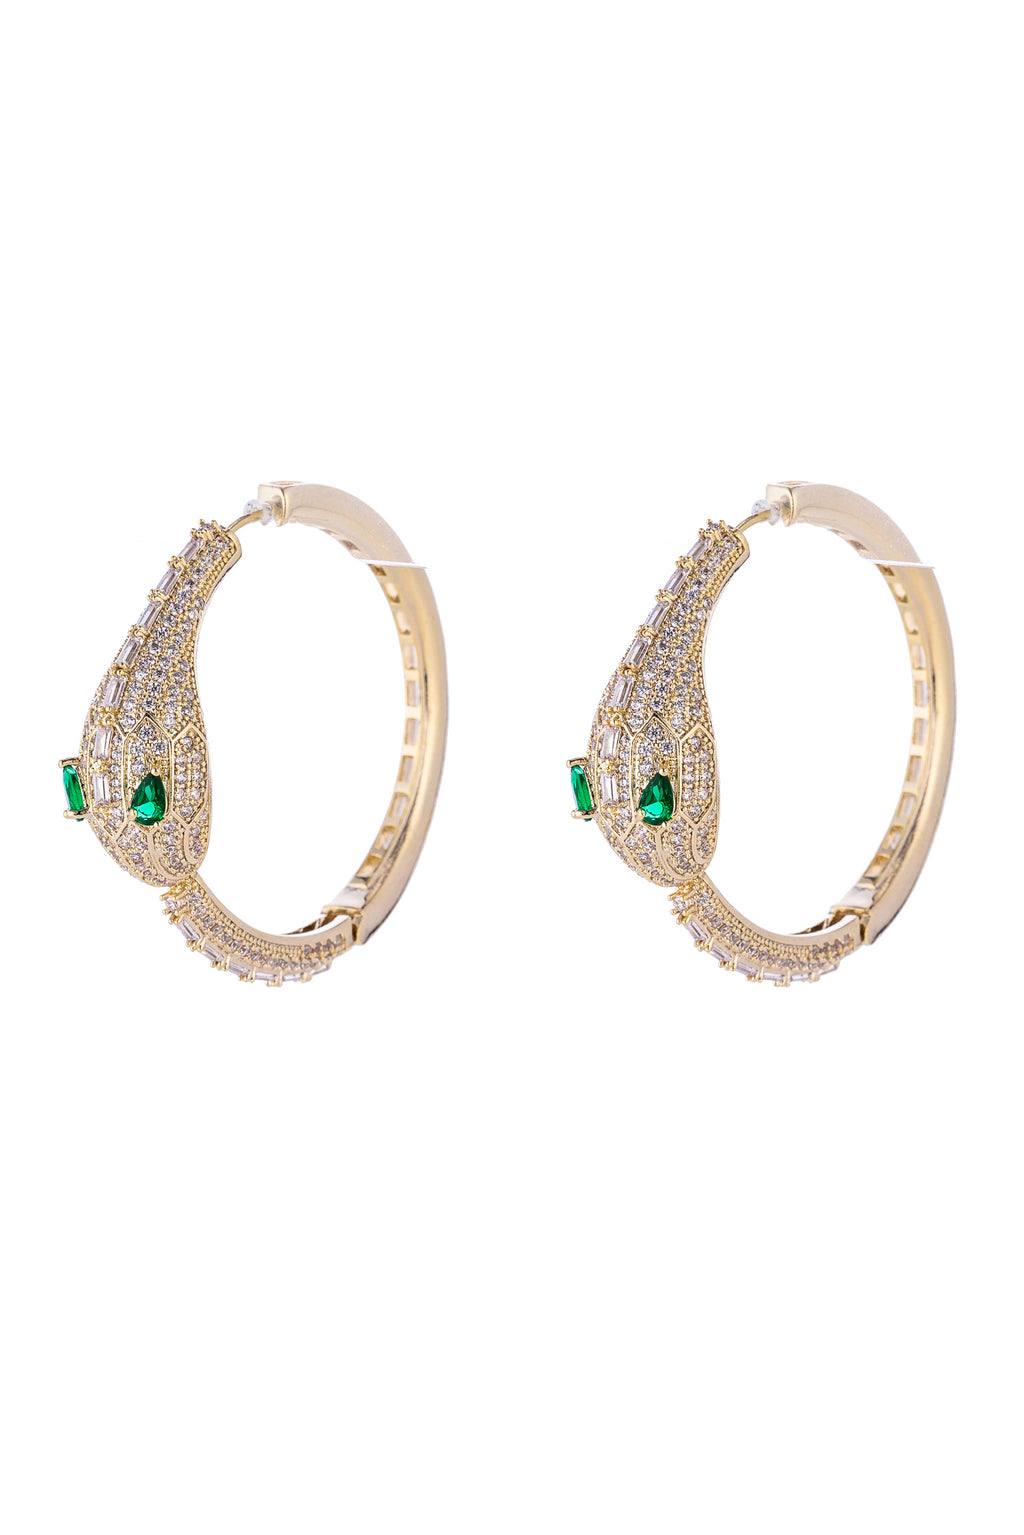 Green mamba 18k gold plated CZ crystal earrings.